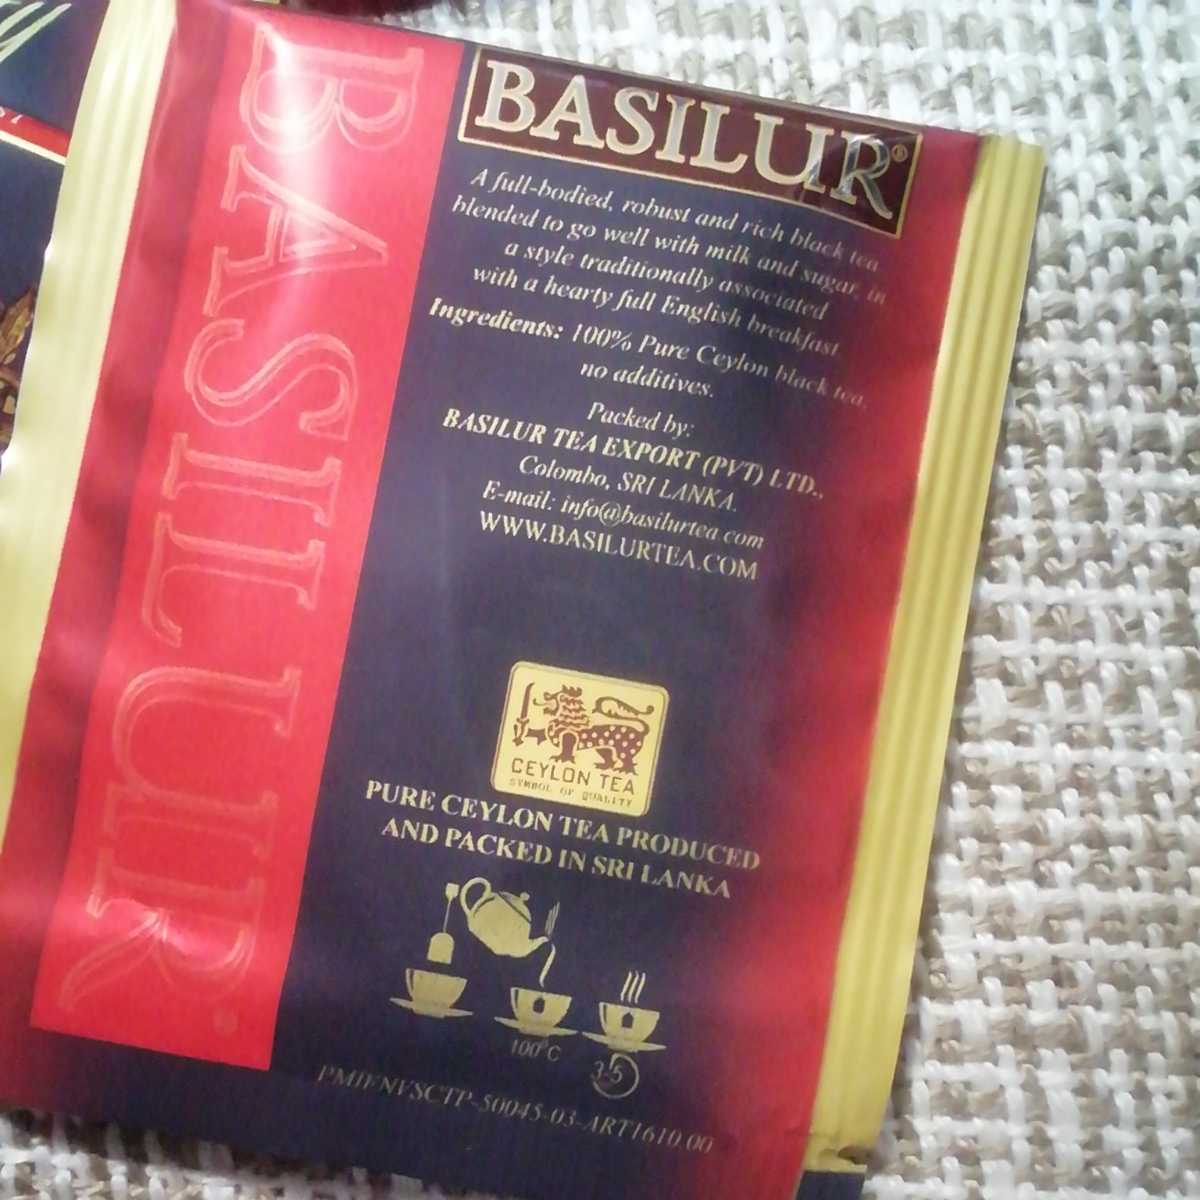 basila- tea wing lishu blur k fast tea bag 18 sack 